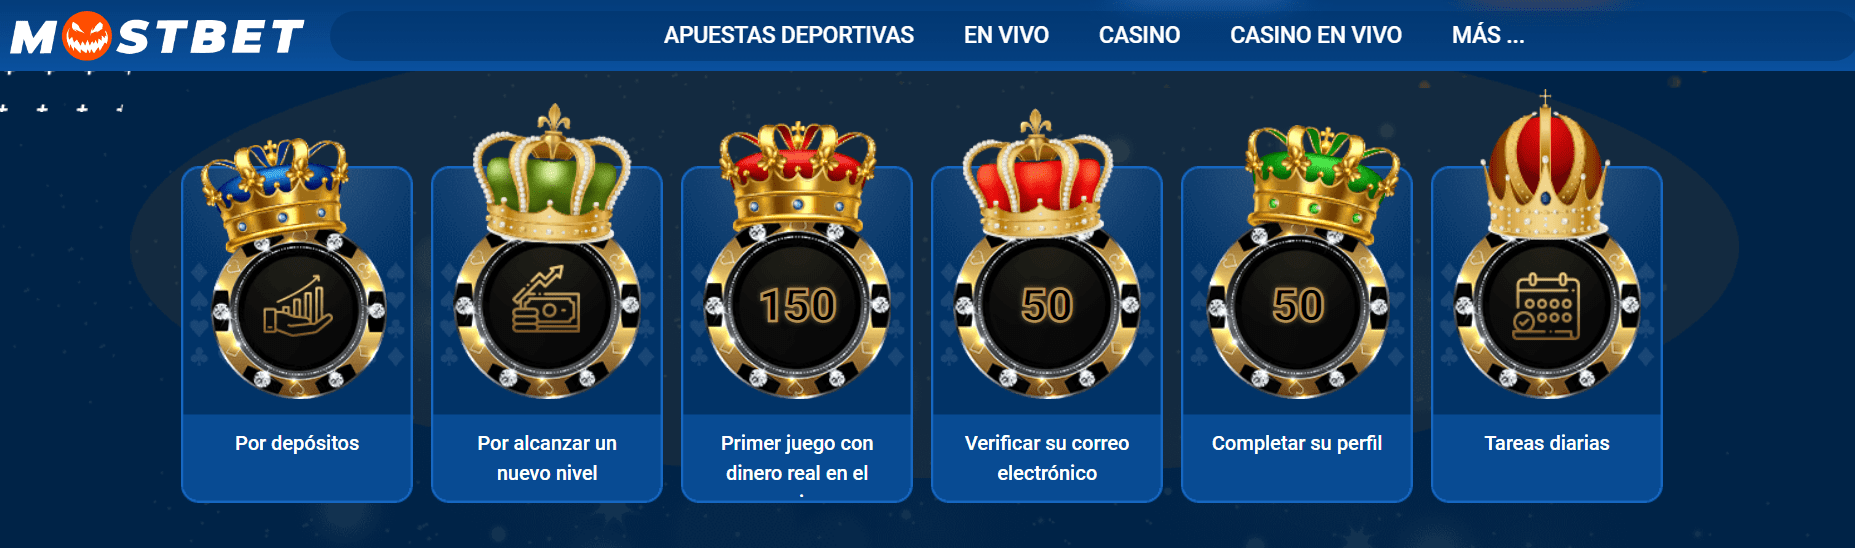 Programa VIP de Mostbet casino